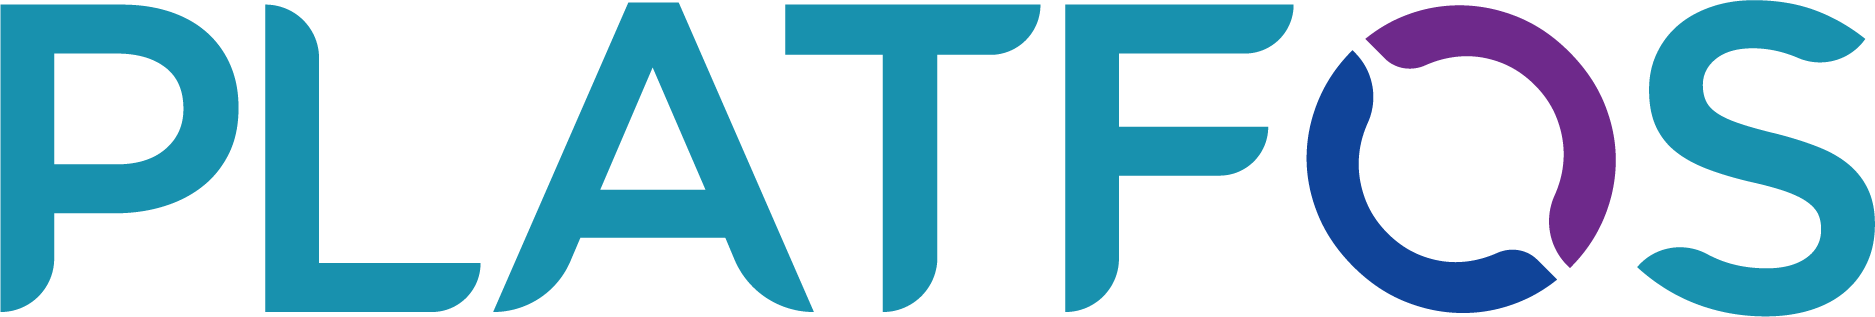 Platfos Co.,Ltd. logo